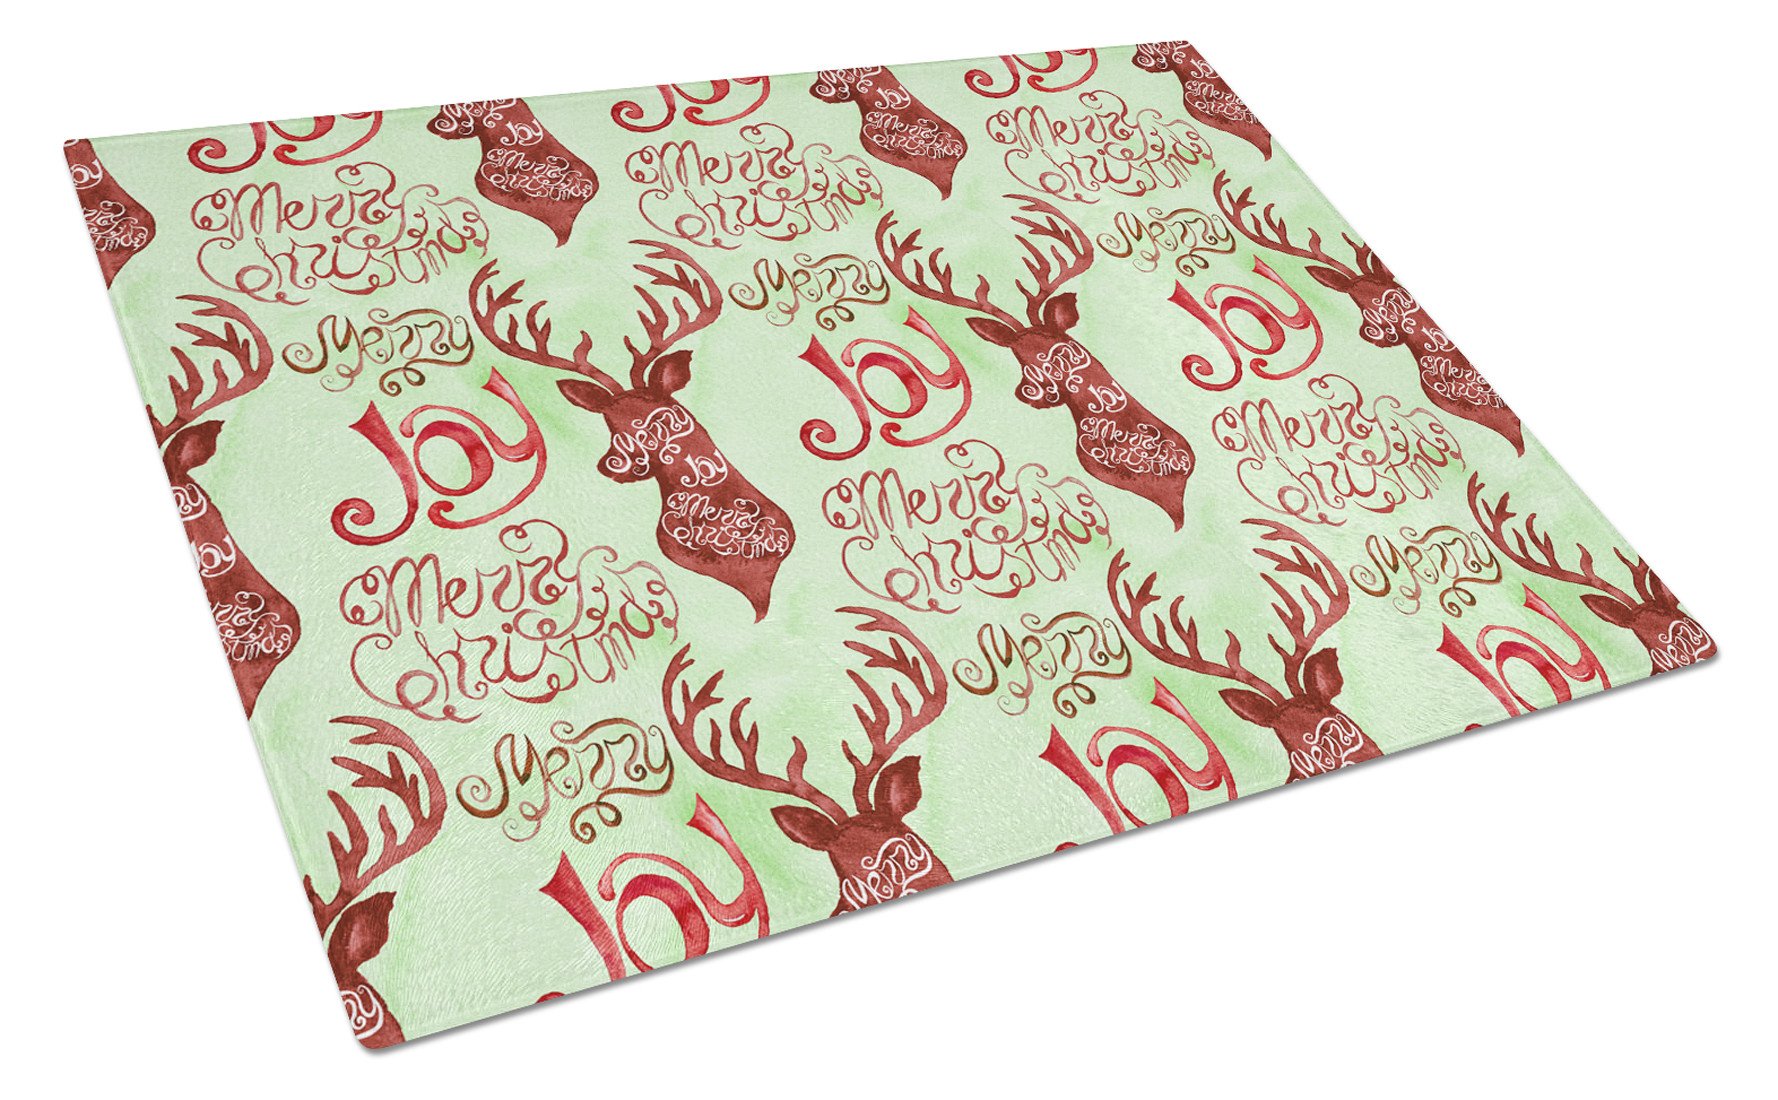 Merry Christmas Joy Reindeer Glass Cutting Board Large BB7488LCB by Caroline's Treasures